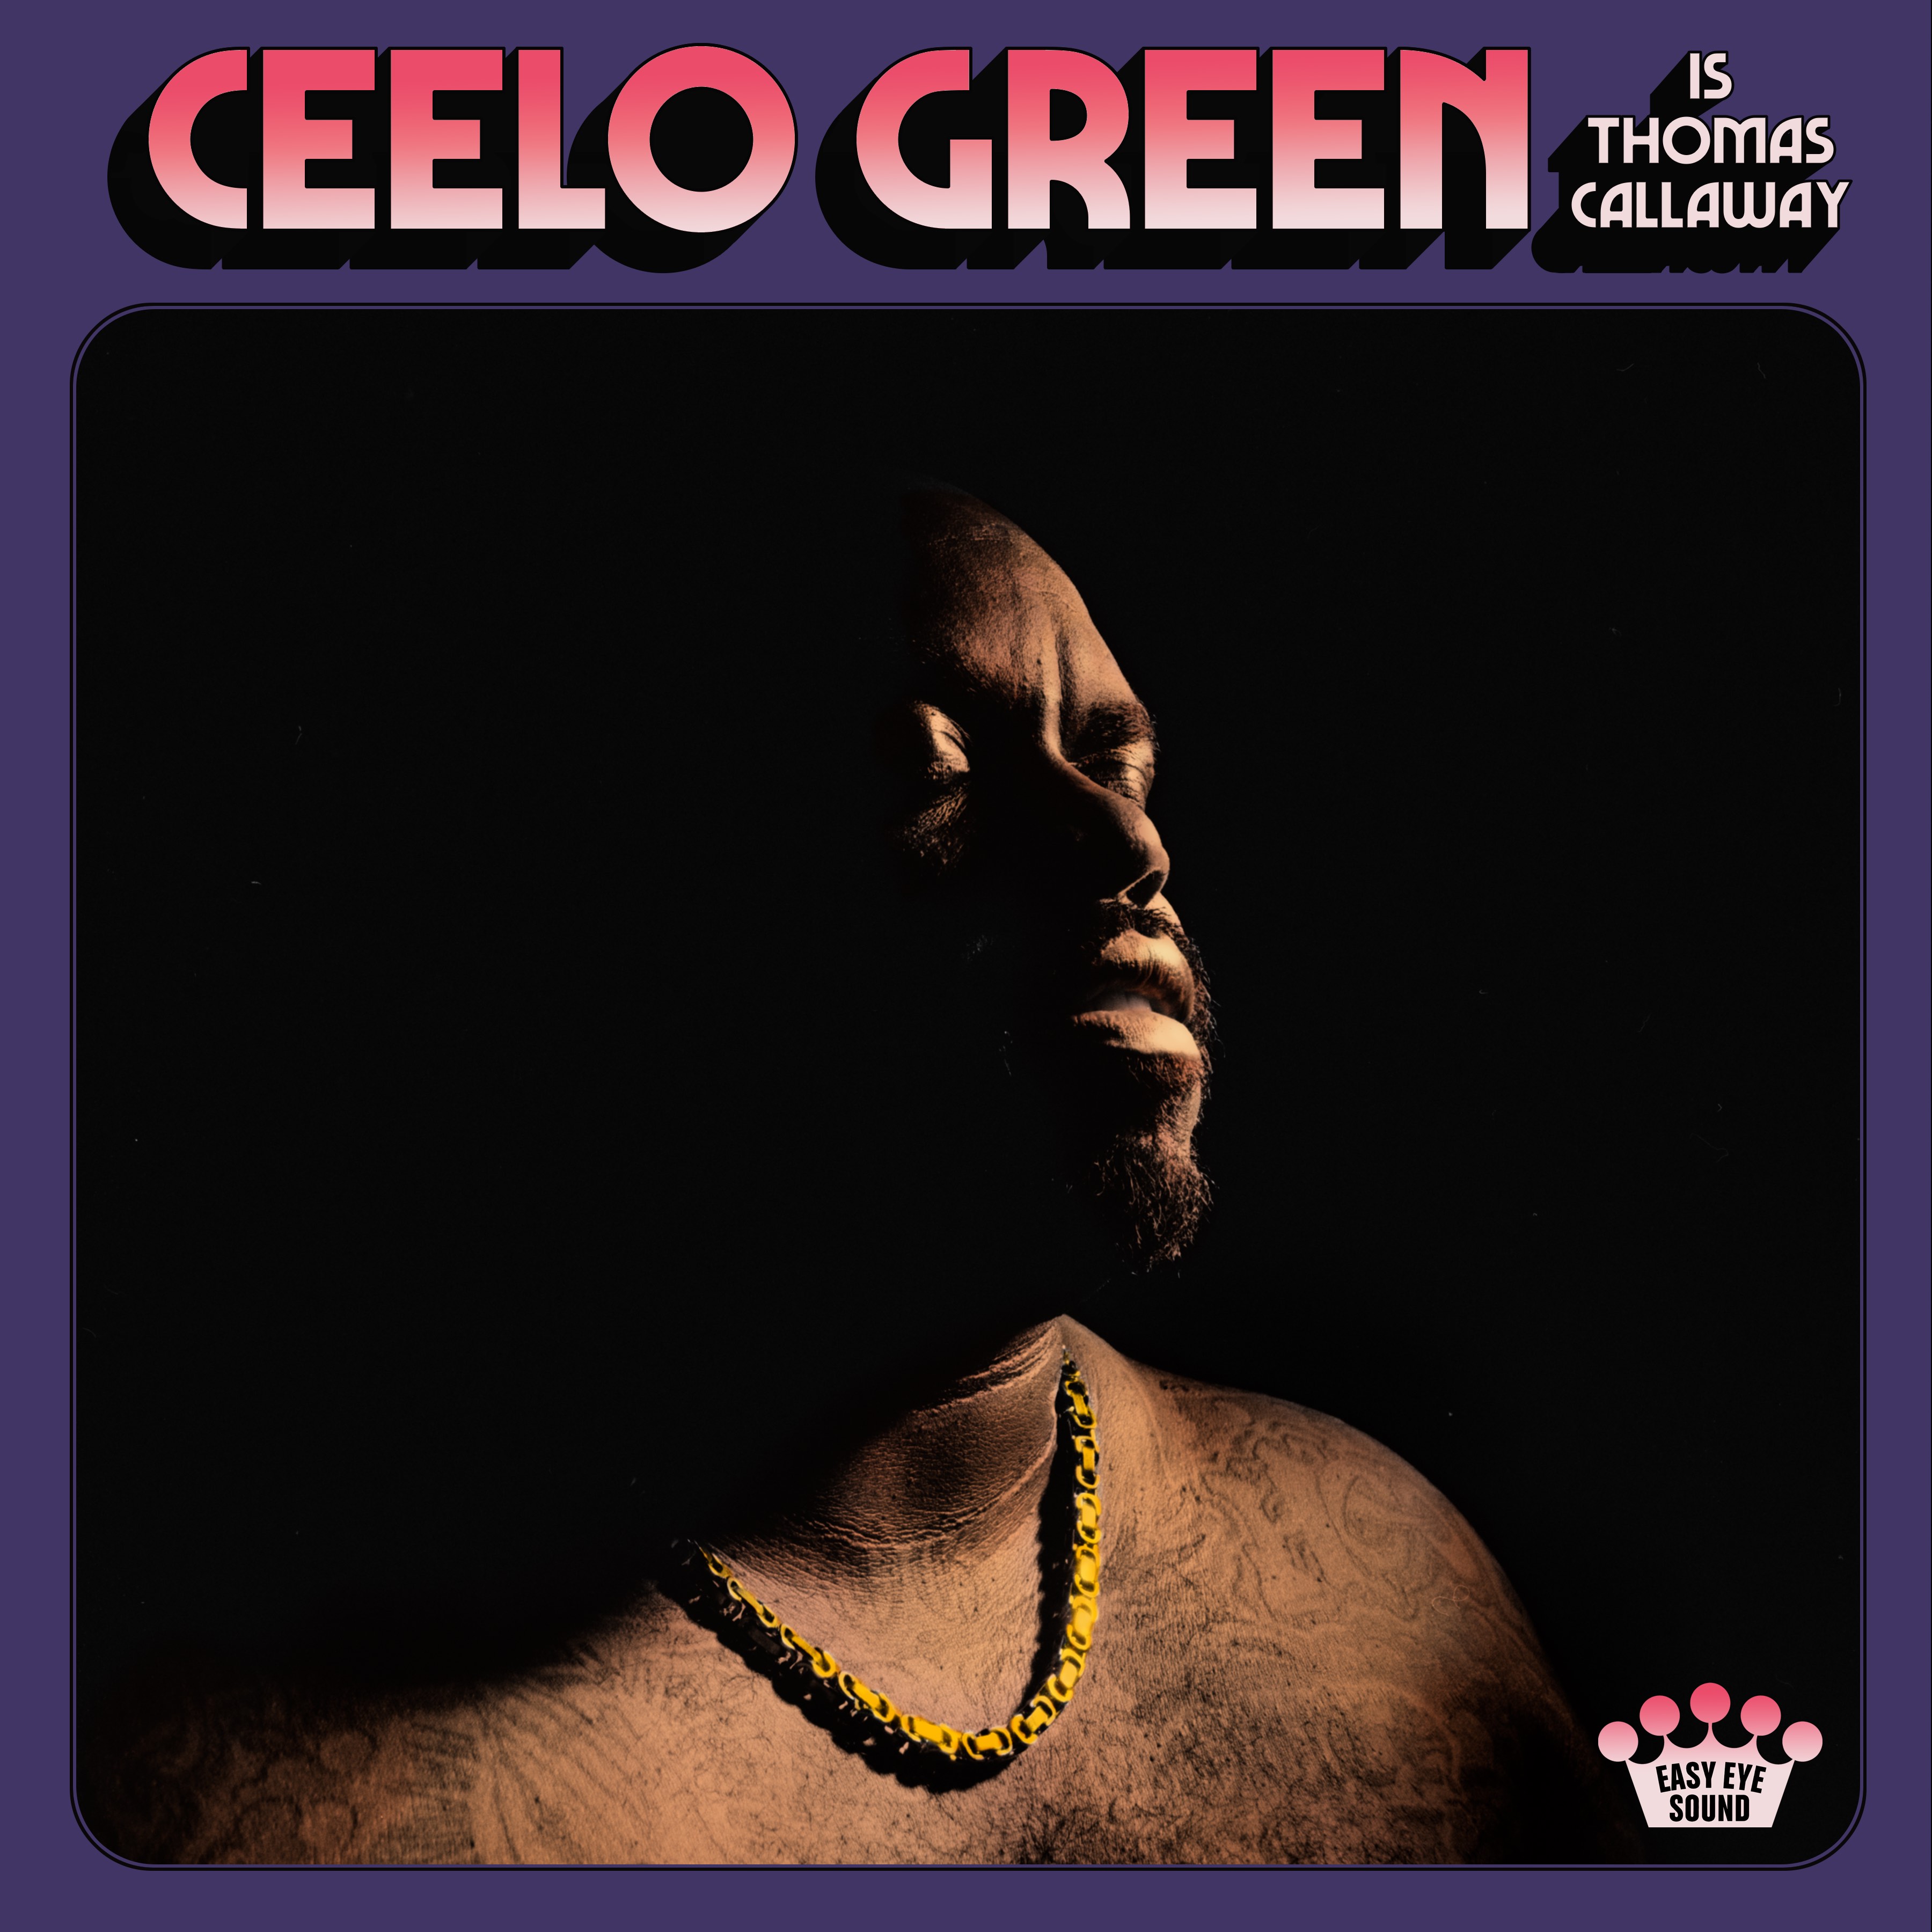 150813-ceelo-green-releases-brand-new-album-ceelo-green-is-thomas-callaway-1304600.jpg